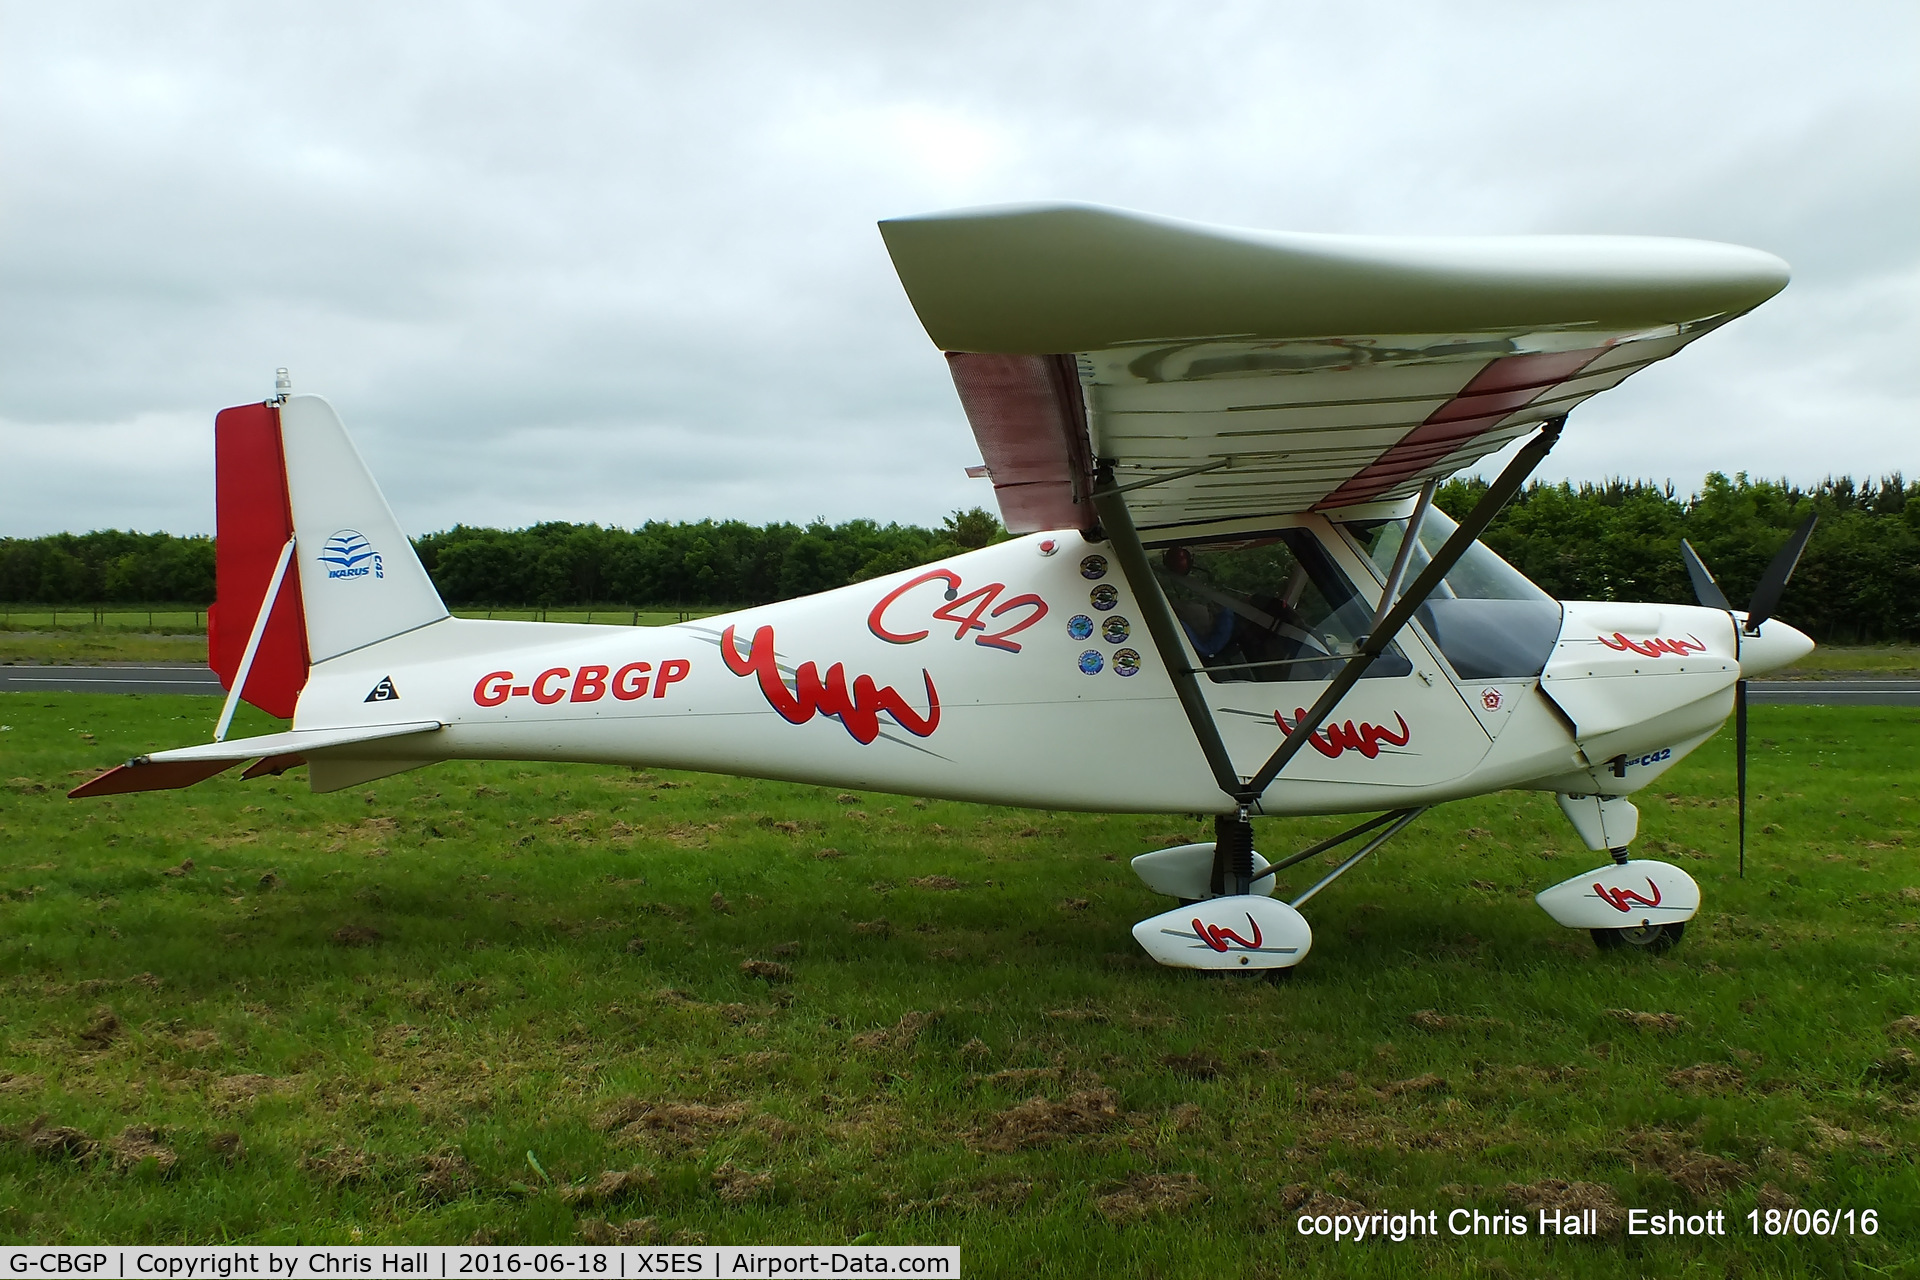 G-CBGP, 2001 Comco Ikarus C42 FB UK C/N PFA 322-13741, at the Great North Fly in. Eshott